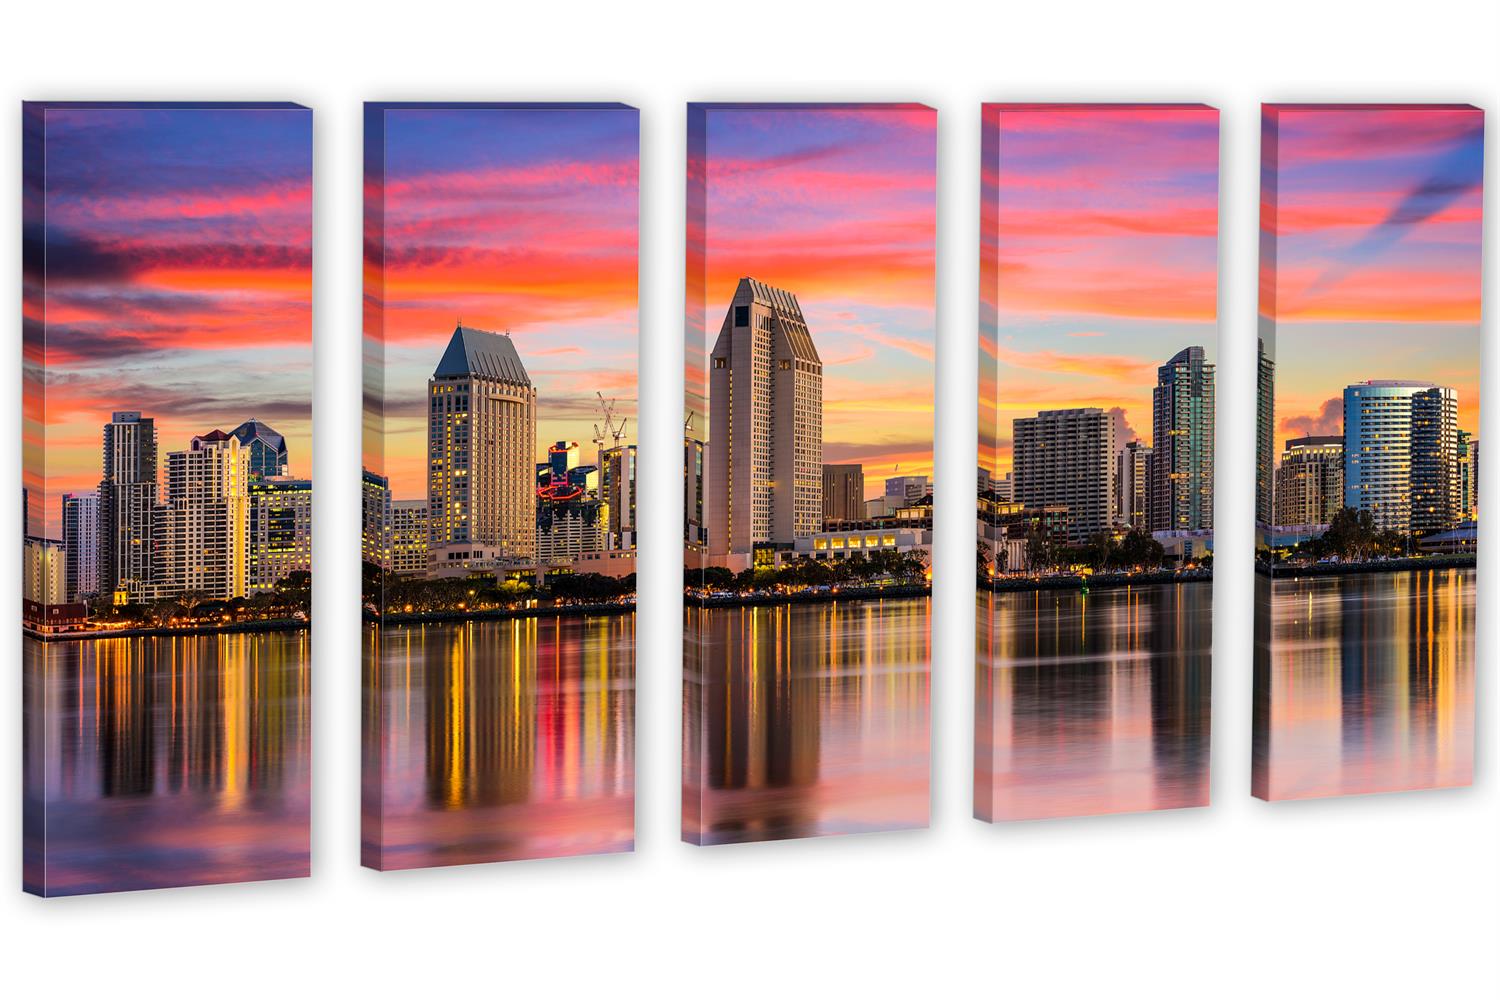 San Diego Skyline Canvas Print Wall Art. 5 Panel Split